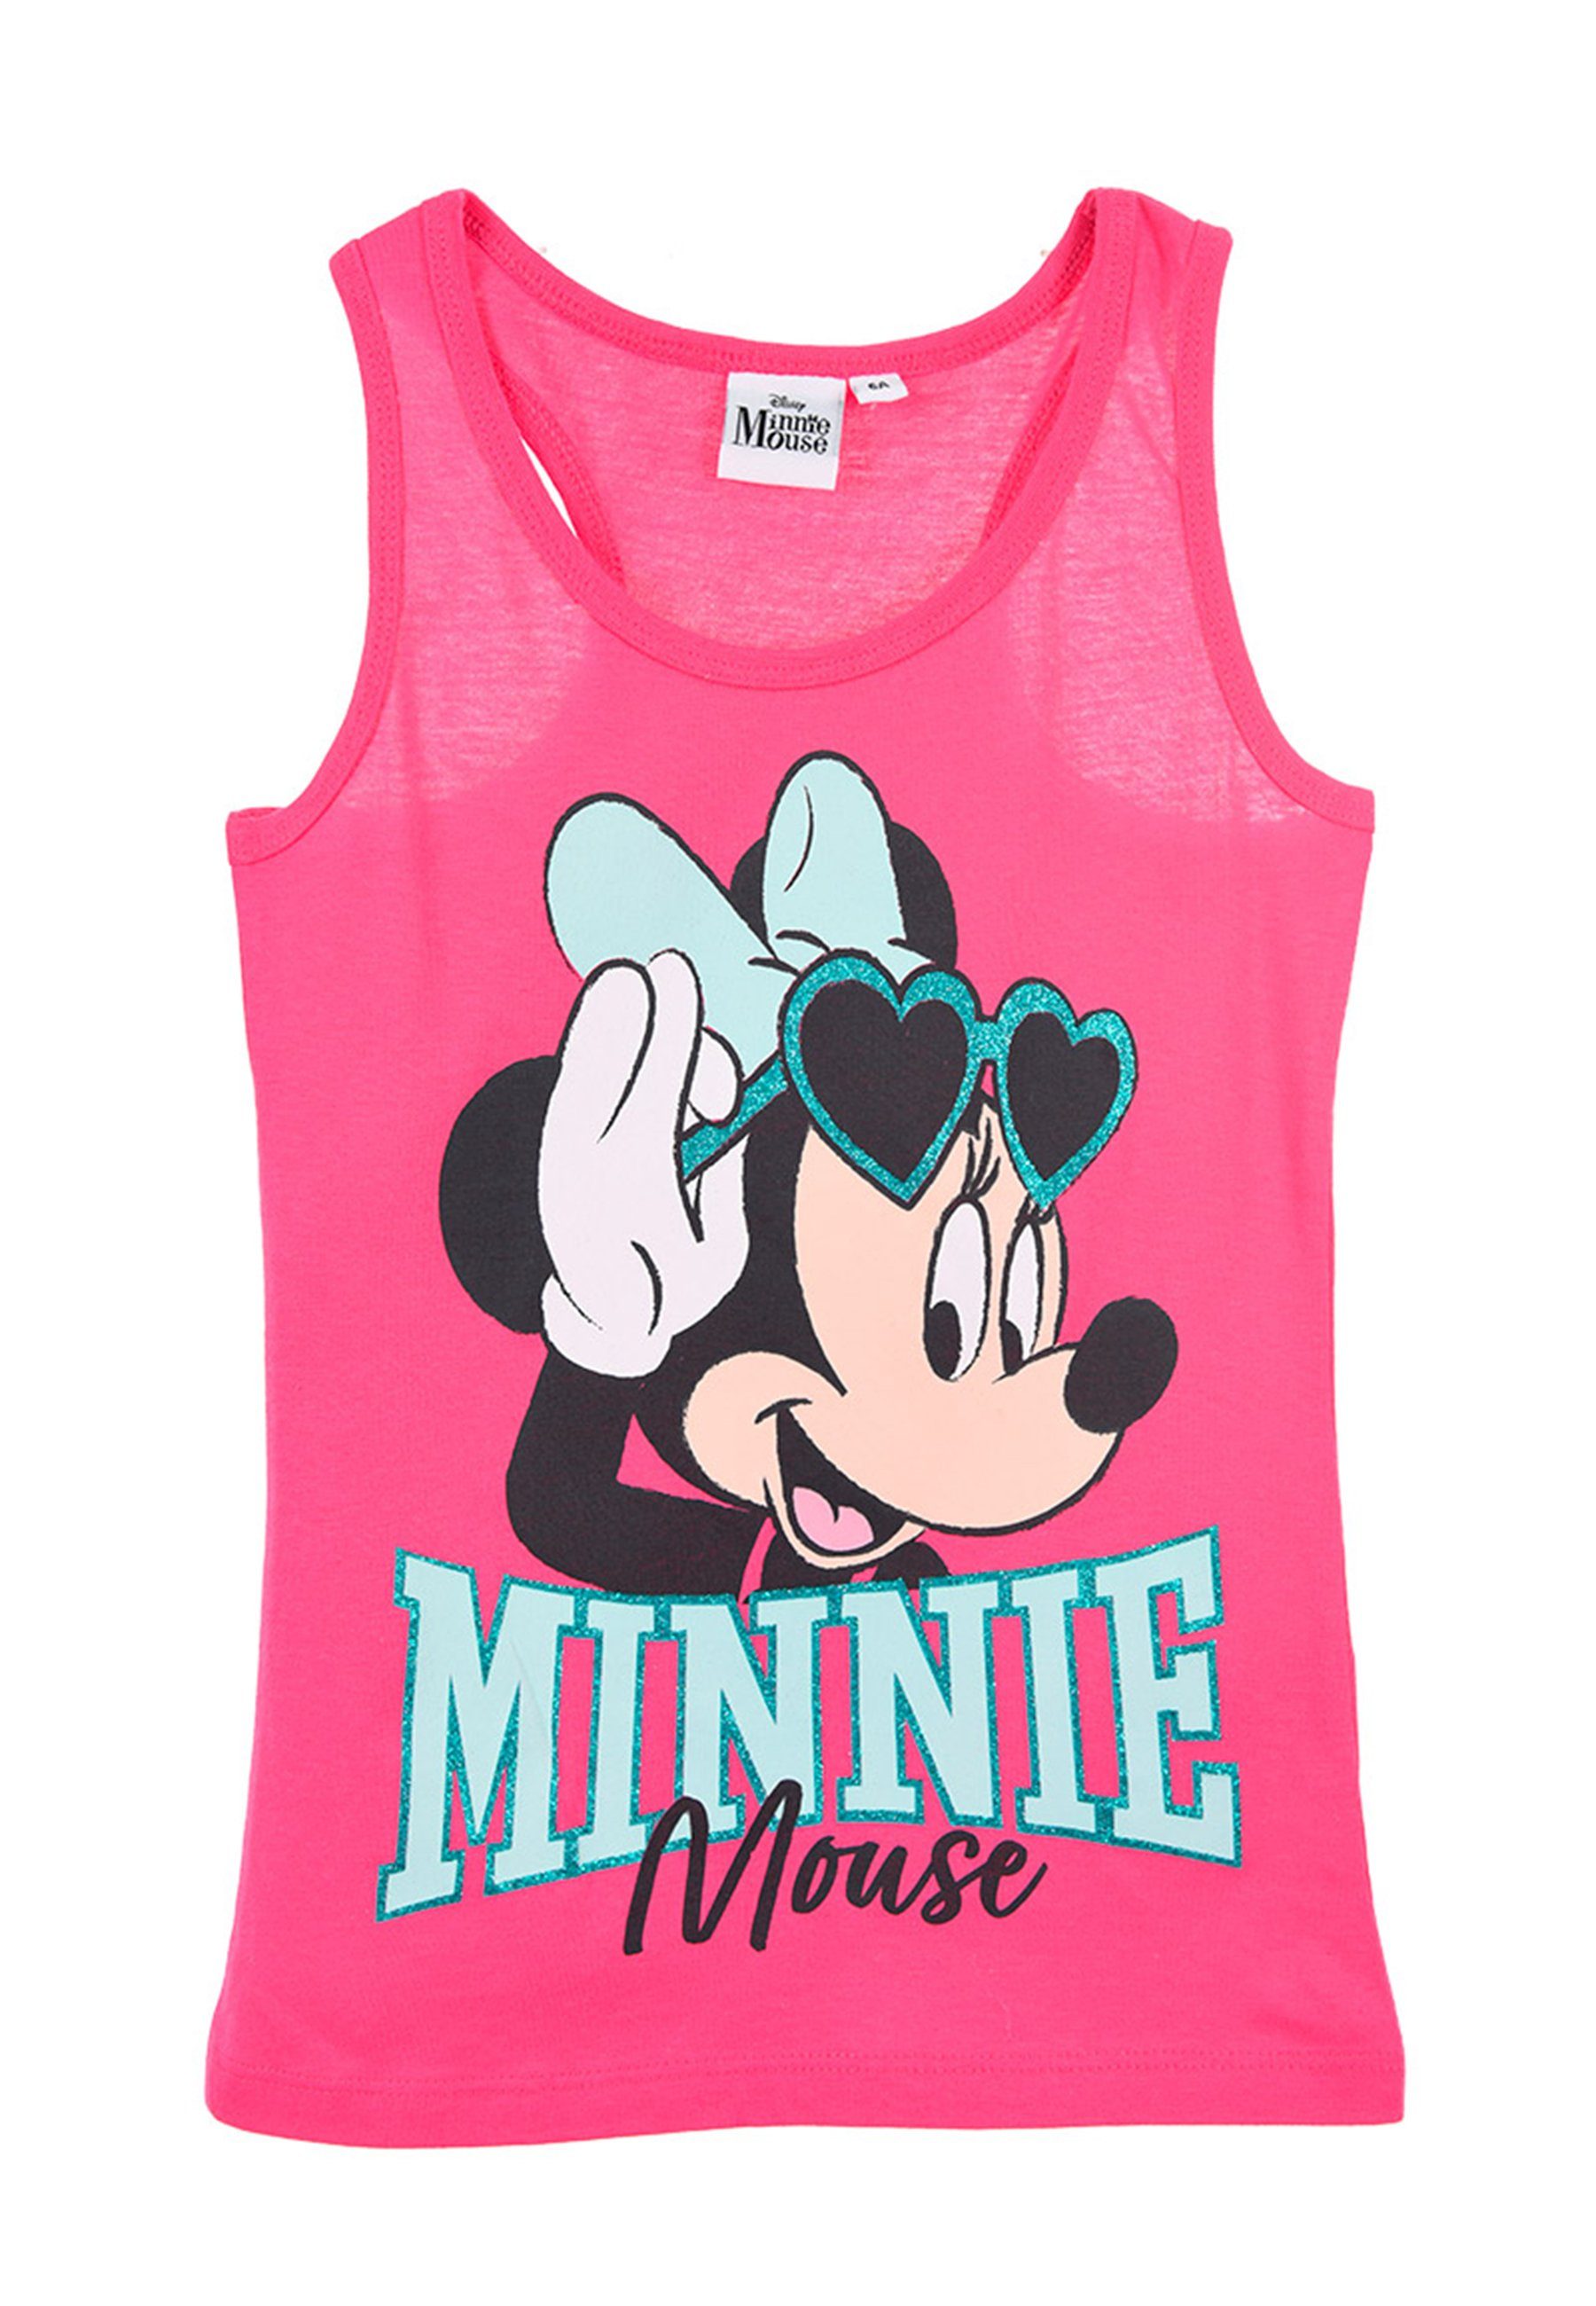 Disney Minnie Mouse Muskelshirt Mädchen Shirt Sommer Top Kinder Träger-Shirt Pink